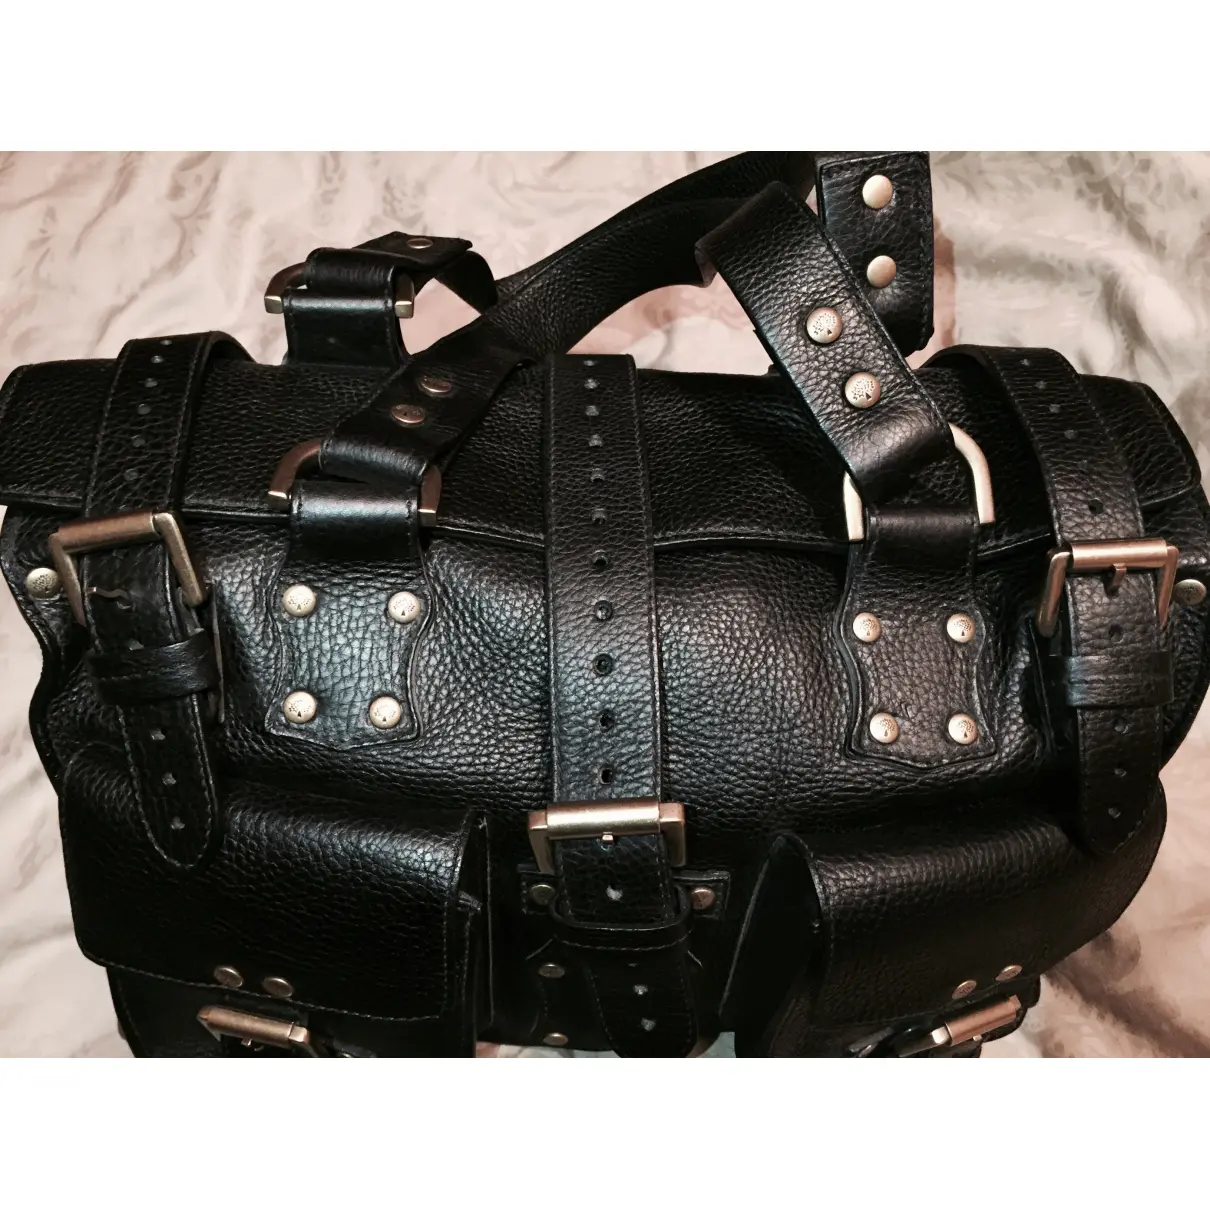 Buy Mulberry Roxanne leather handbag online